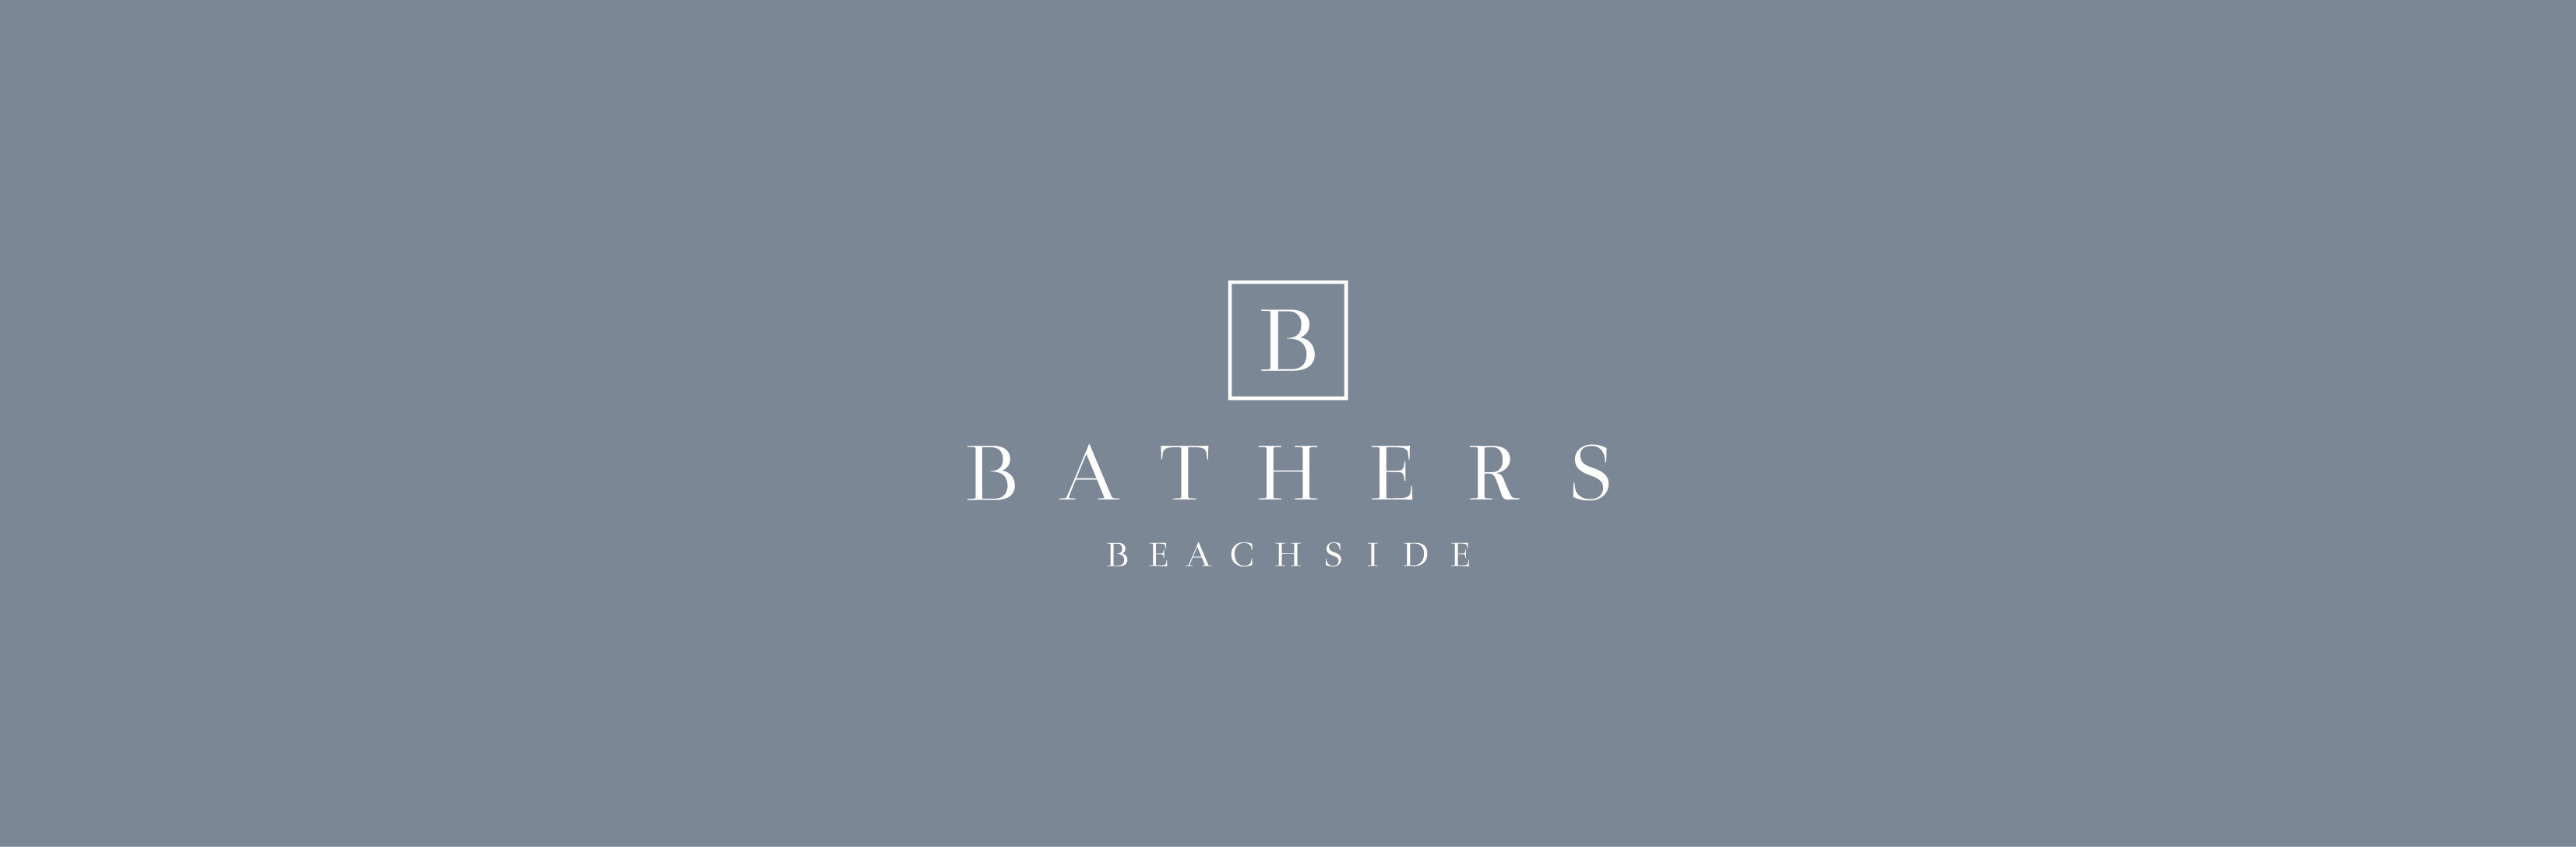 Bathers Beachside Branding Package